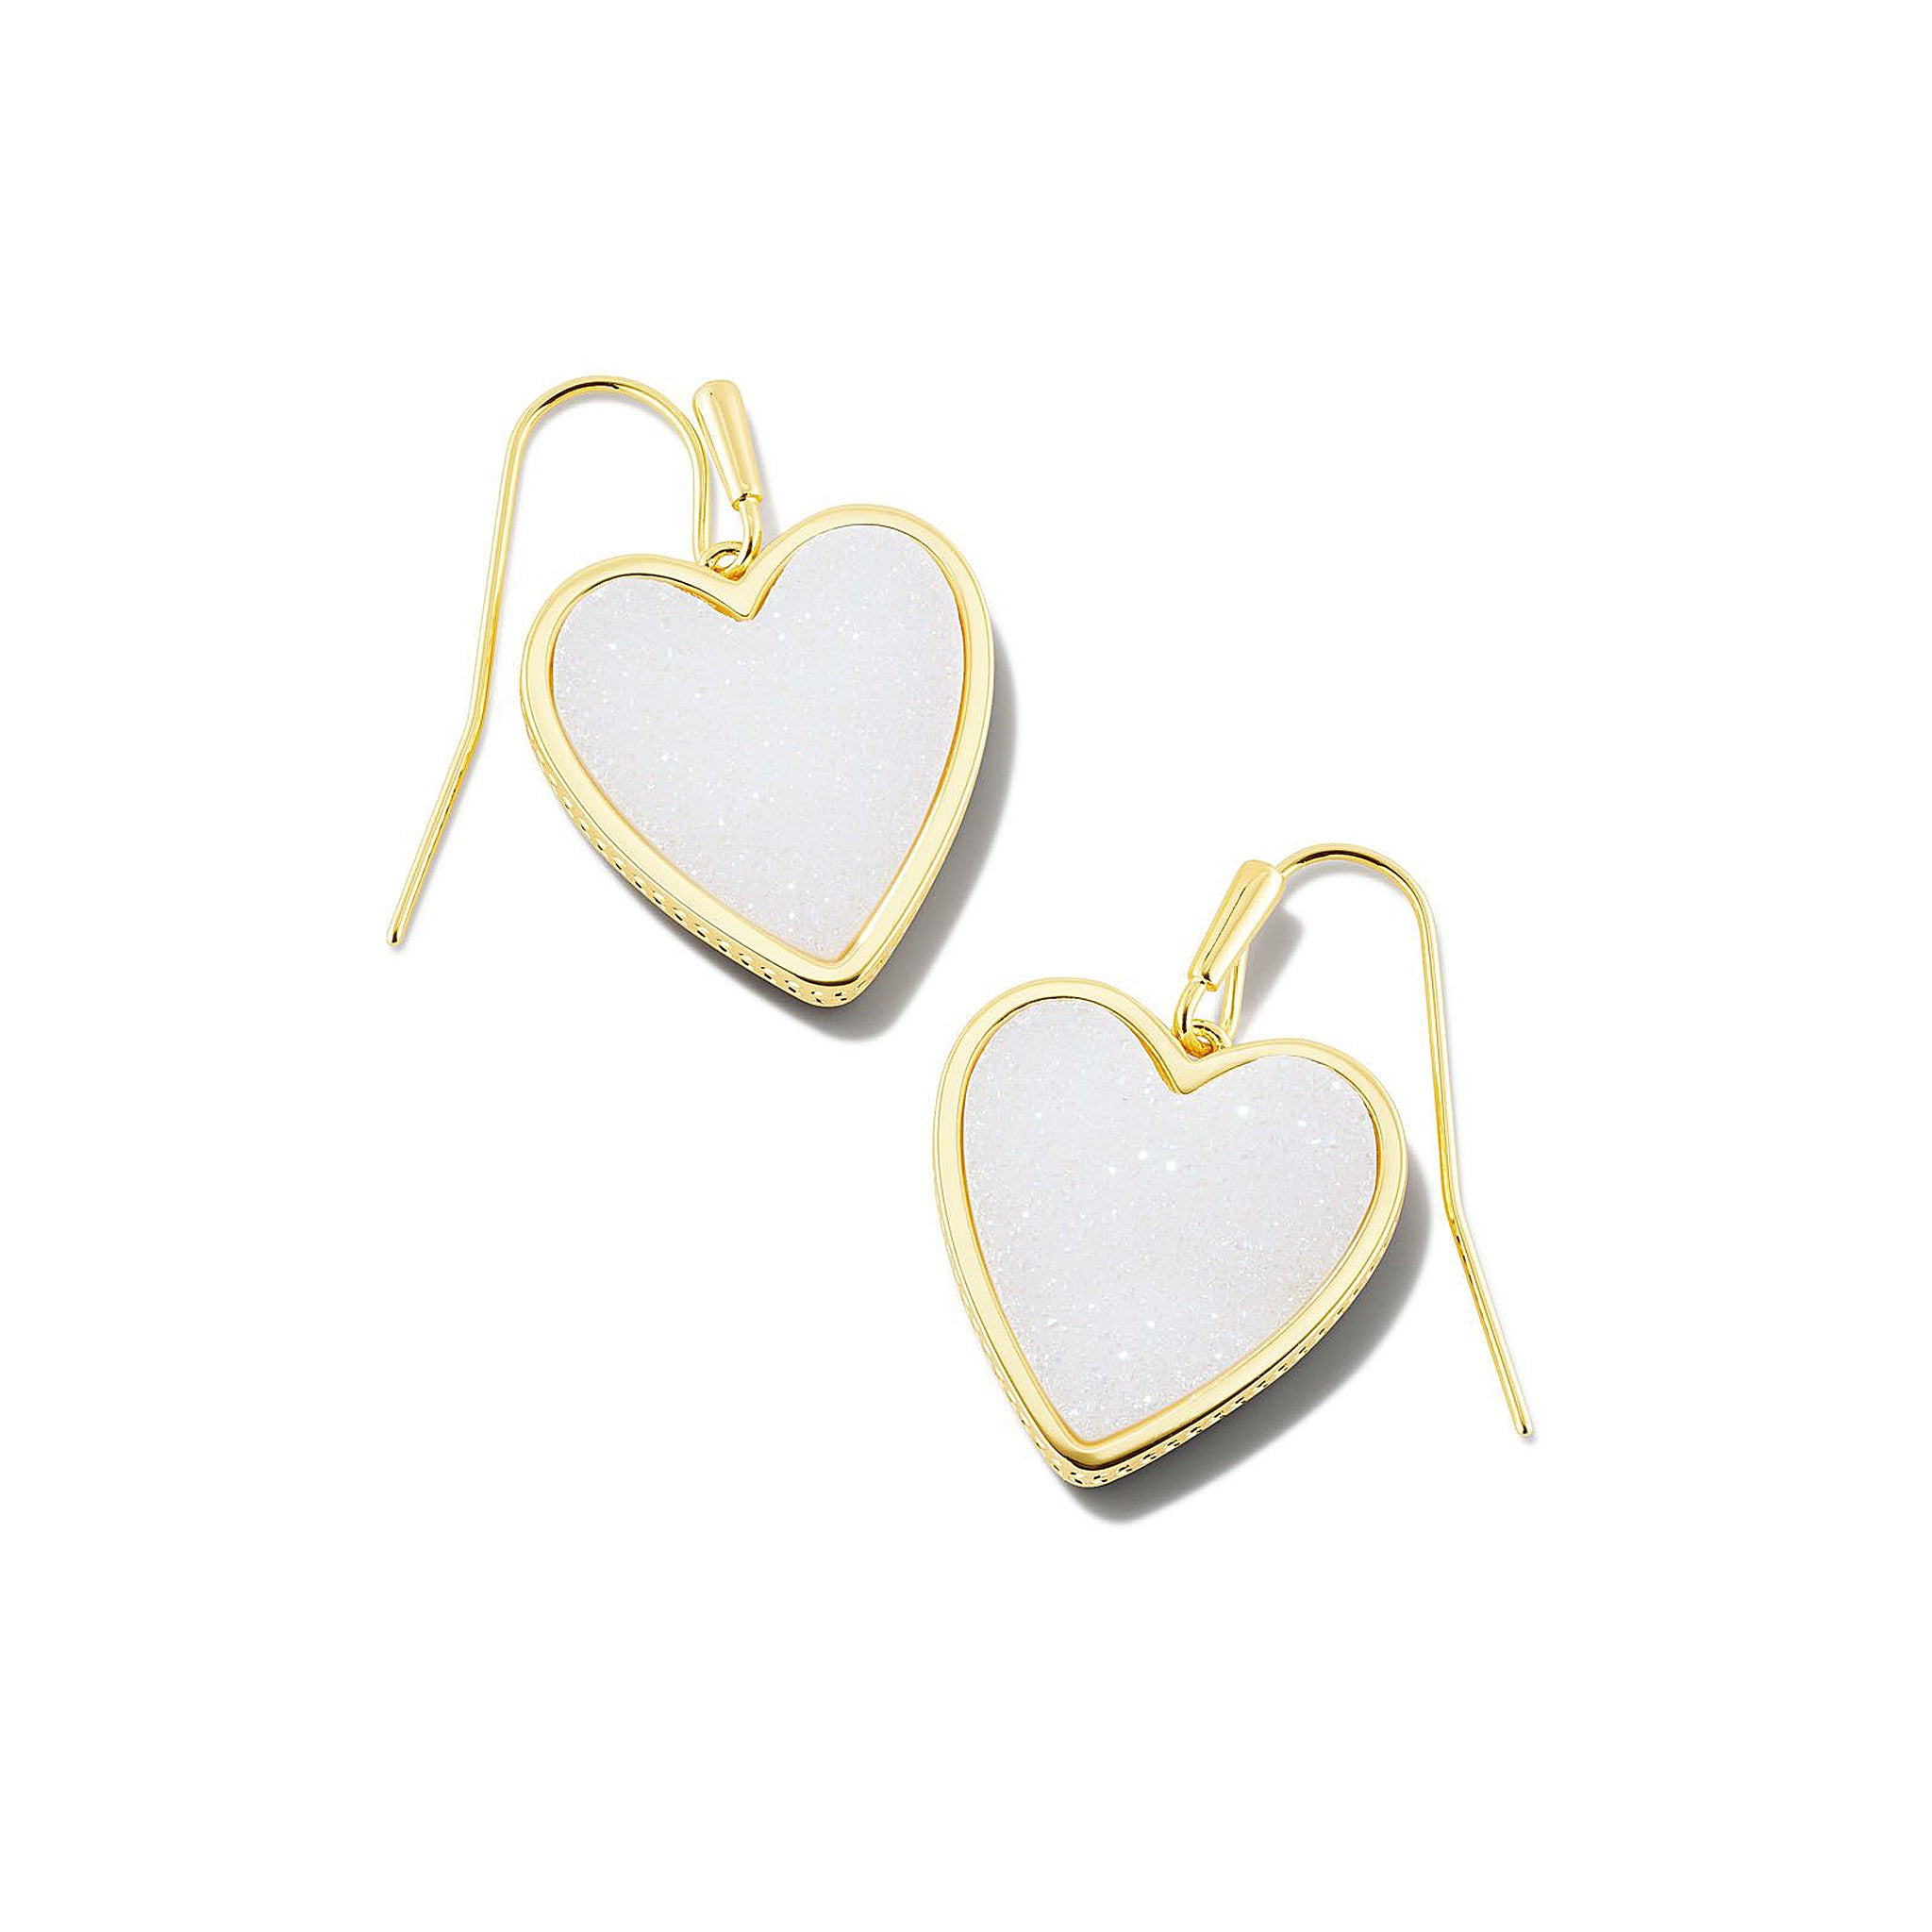 Kendra Scott Heart Dangle Drop Earrings in Iridescent Drusy and Gold